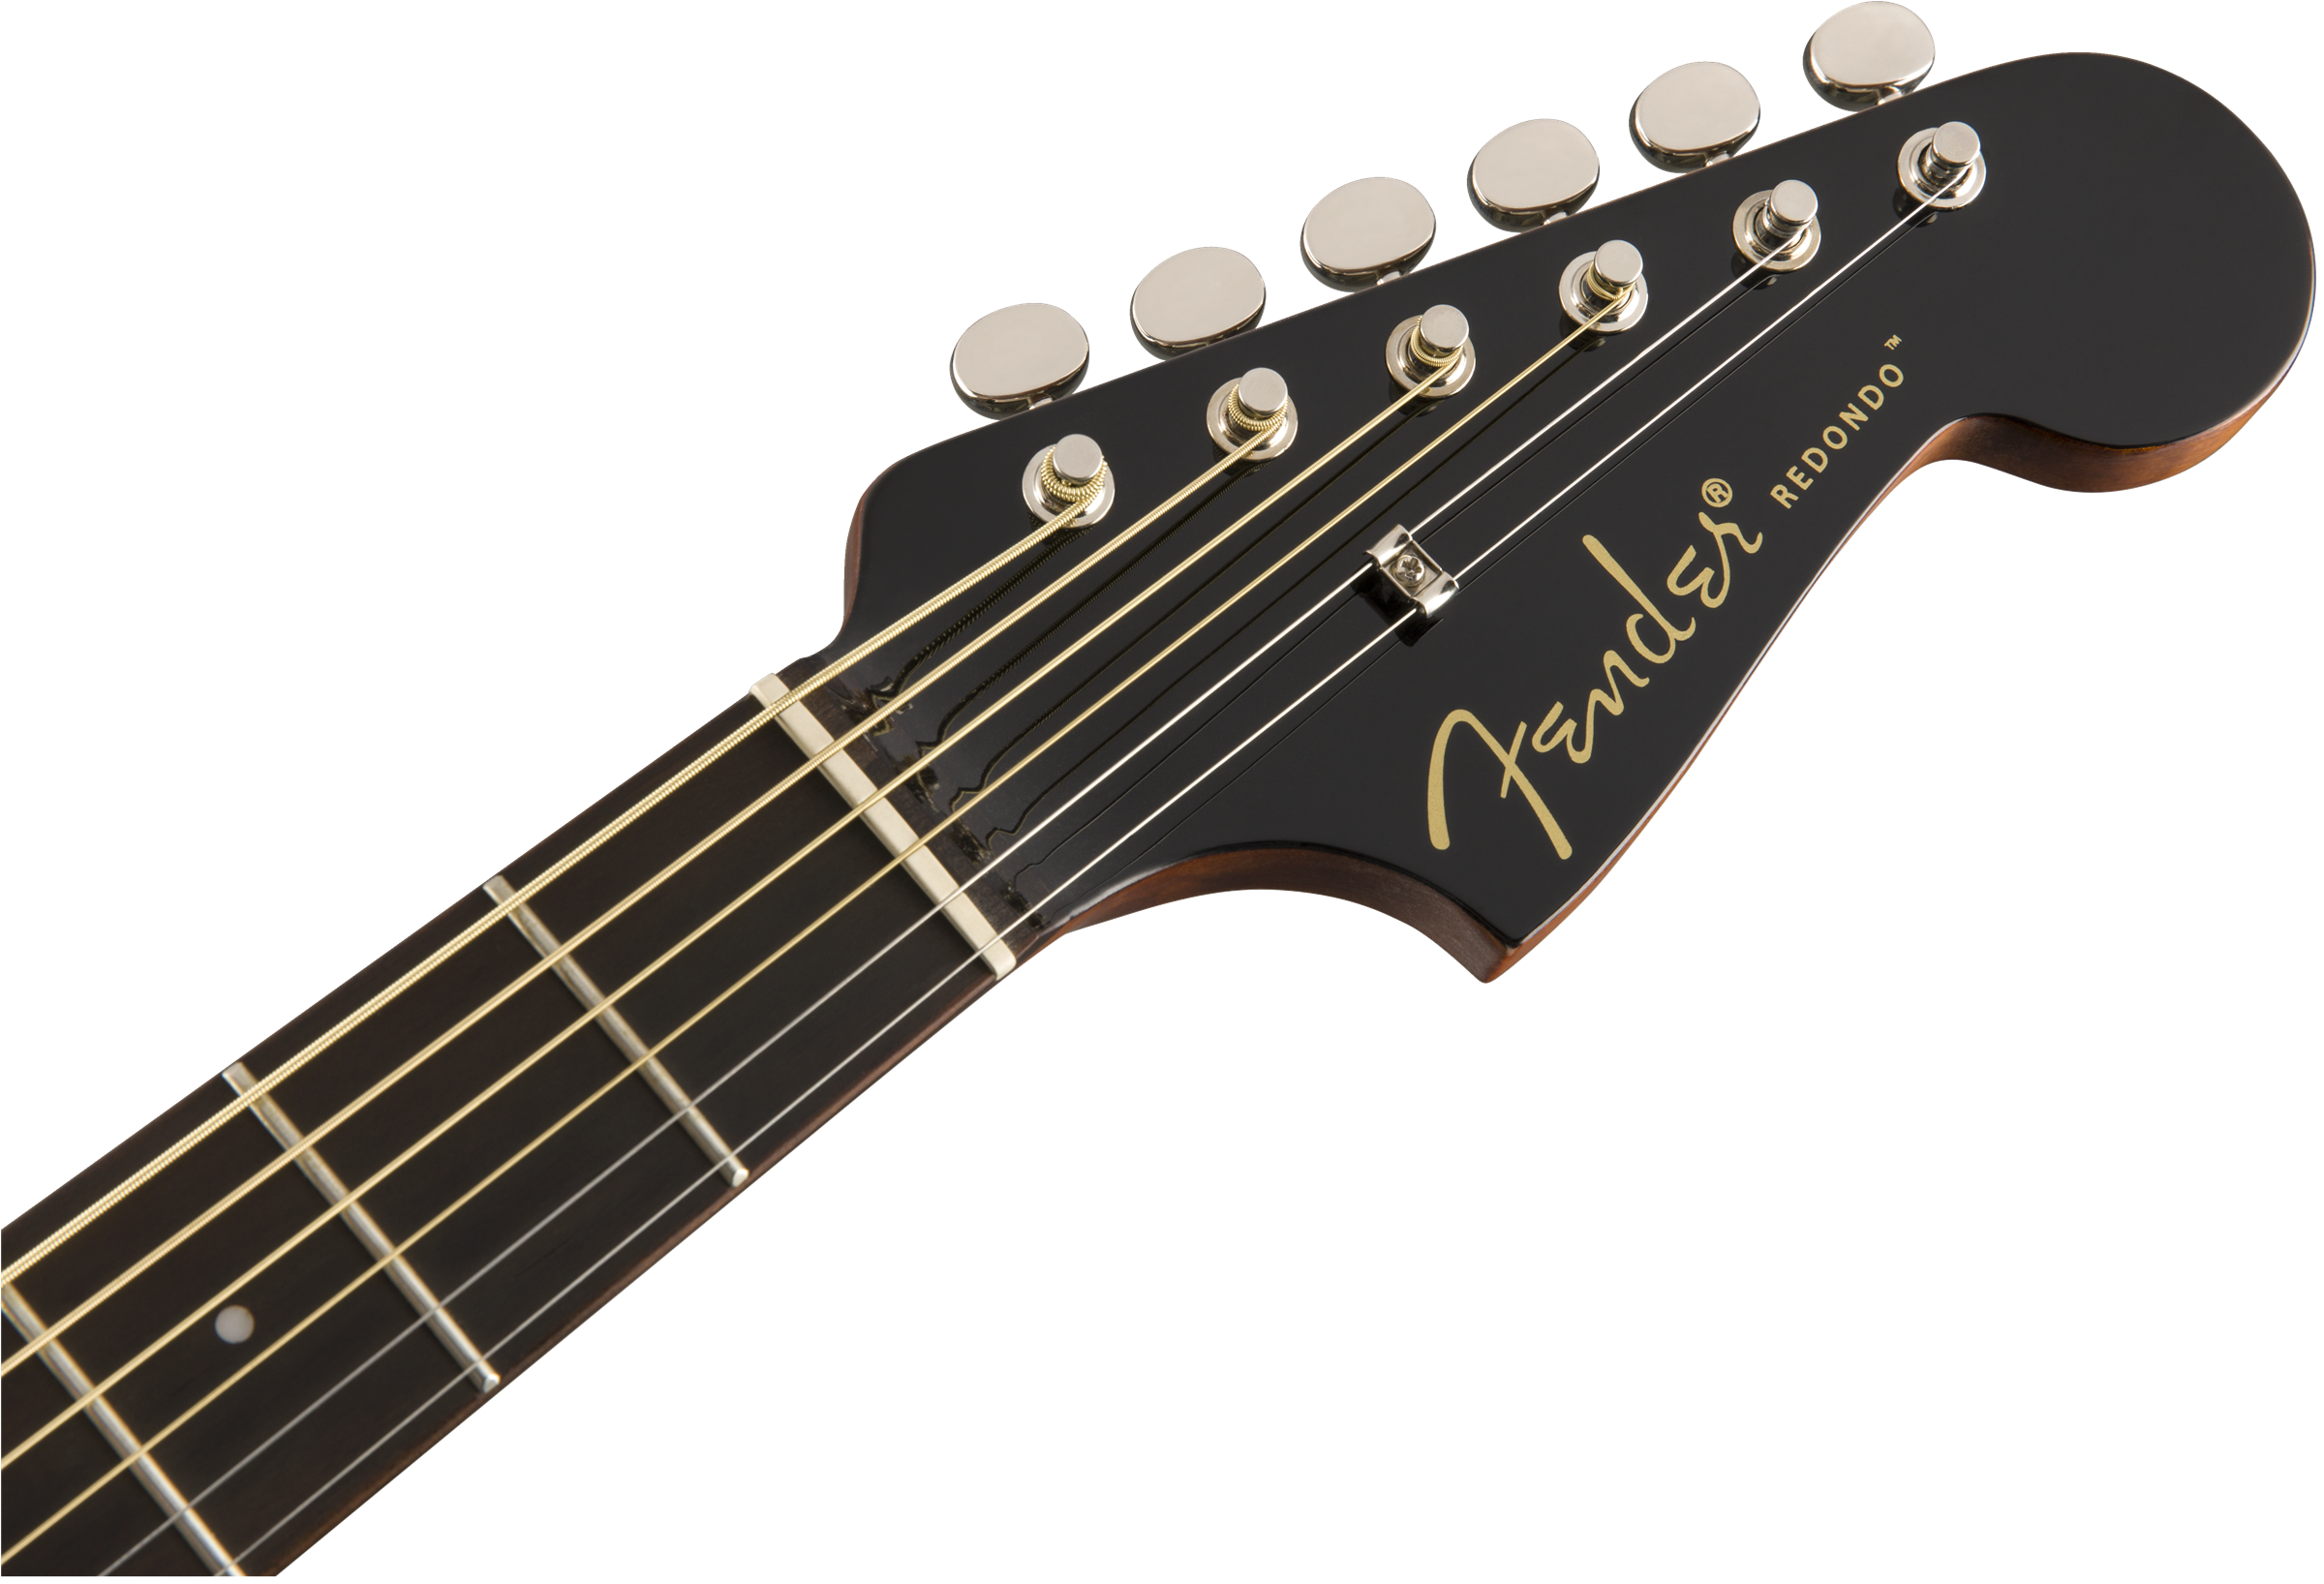 Fender Redondo Player, Walnut Fingerboard, Jetty Black 0970713506